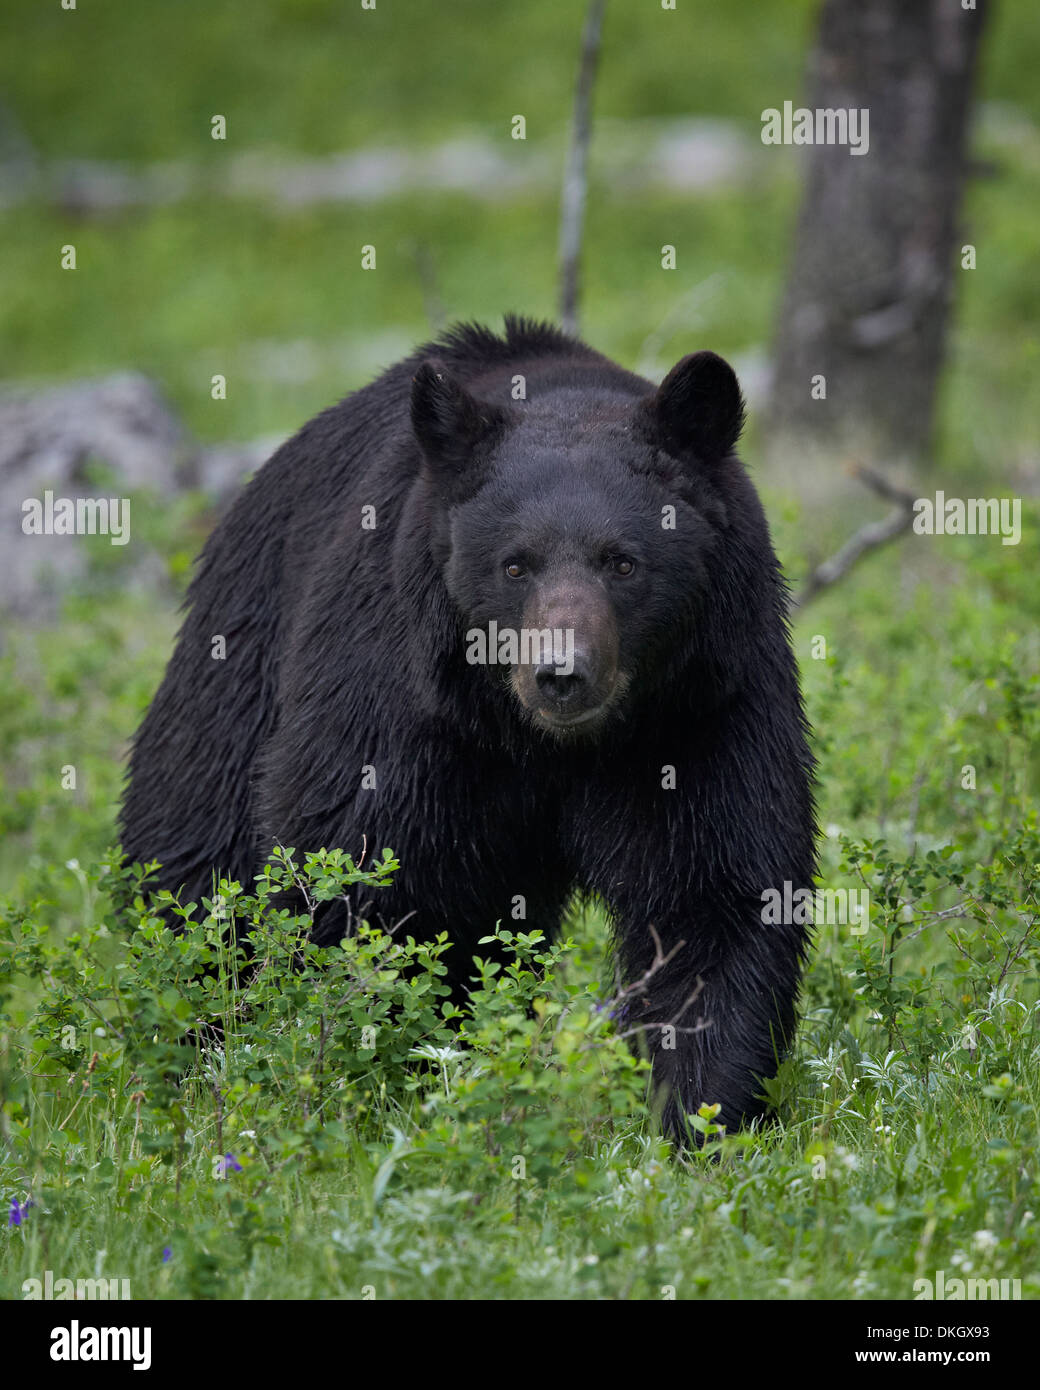 Black bear (Ursus americanus), Yellowstone National Park, Wyoming, United States of America, North America Stock Photo